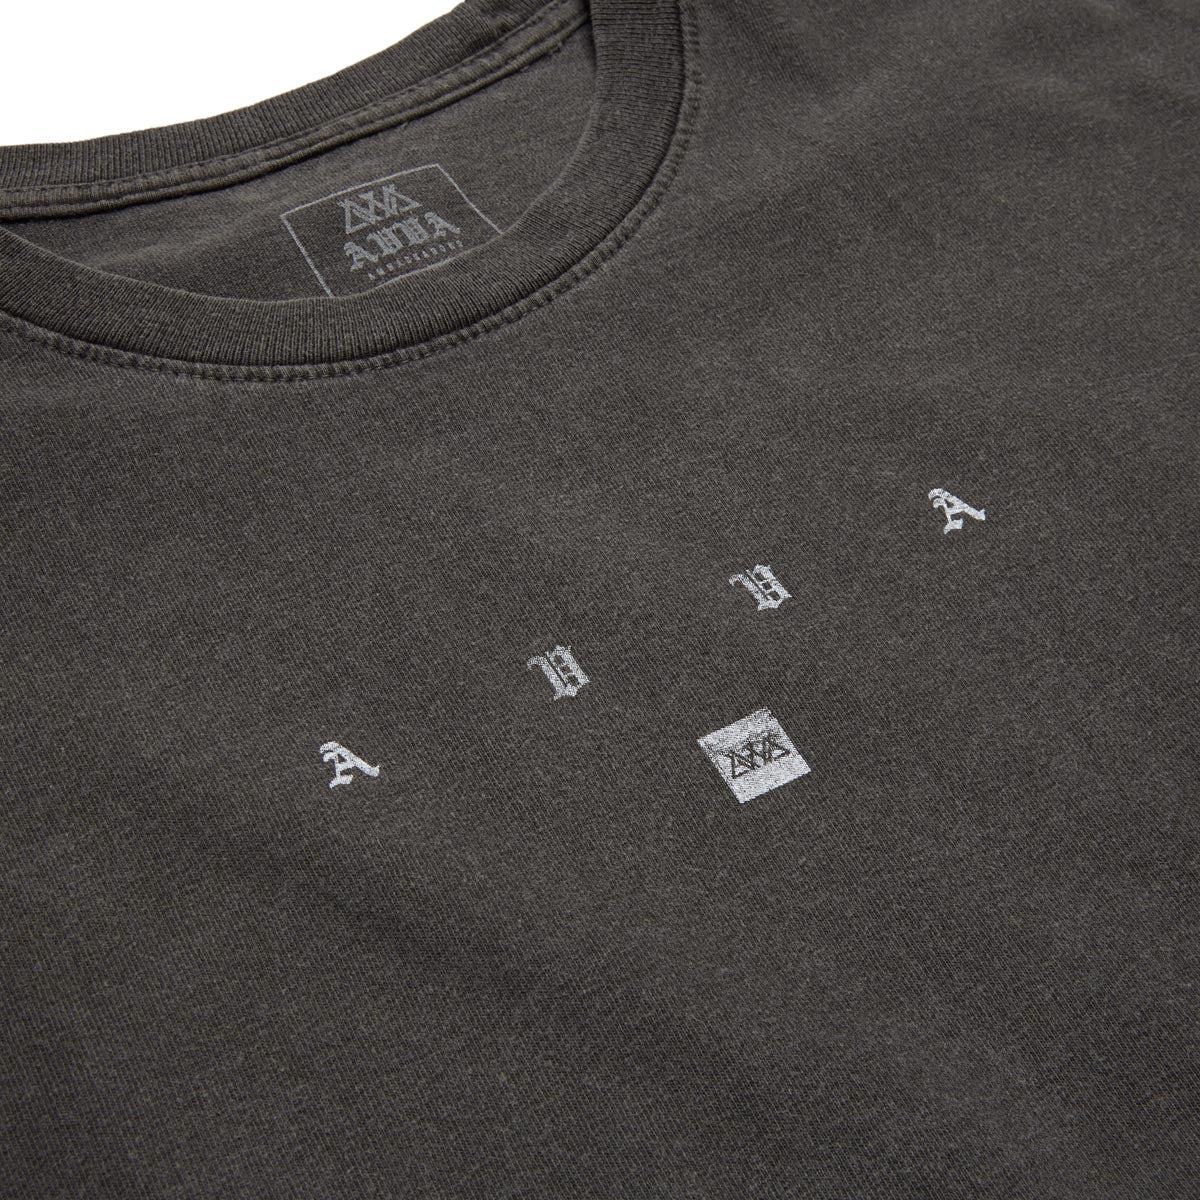 AVVA Reef Rider T-Shirt - Charcoal Grey image 3